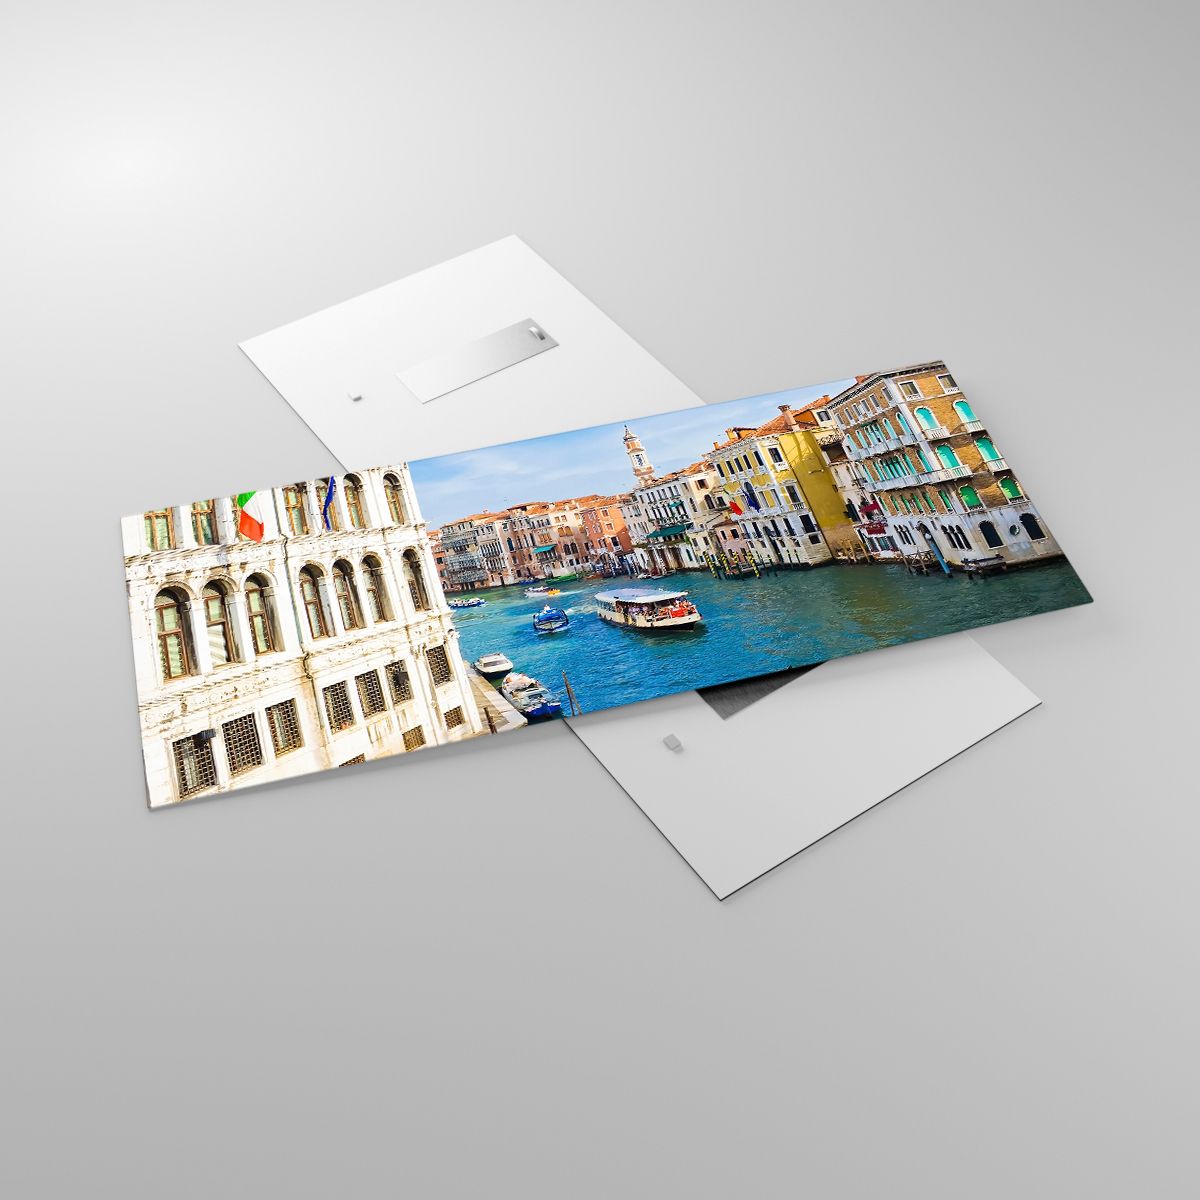 Quadri Venezia, Quadri Architettura, Quadri Canal Grande, Quadri Gondola, Quadri Viaggi